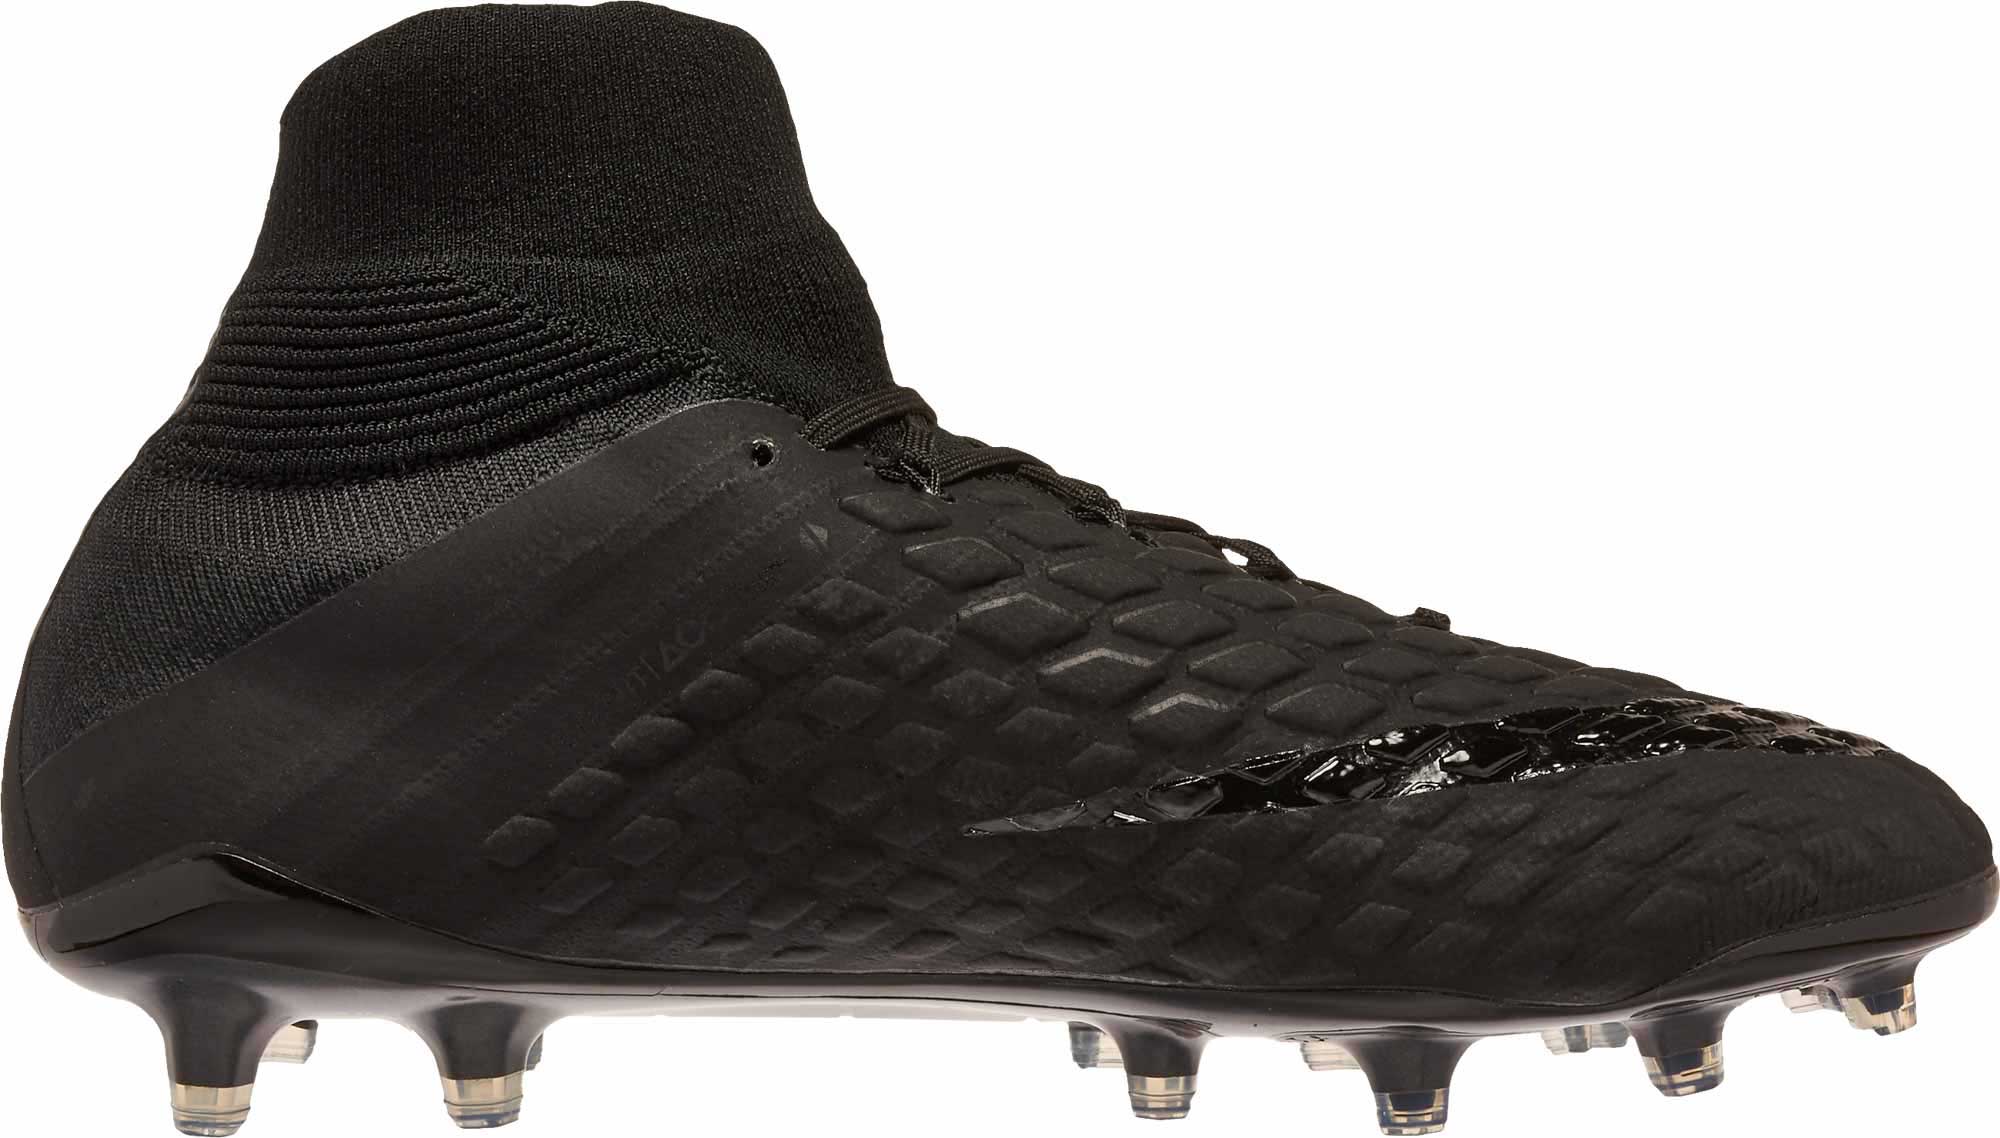 Nike Hypervenom Phantom III DF FG Soccer Cleats - Black - Soccer Master